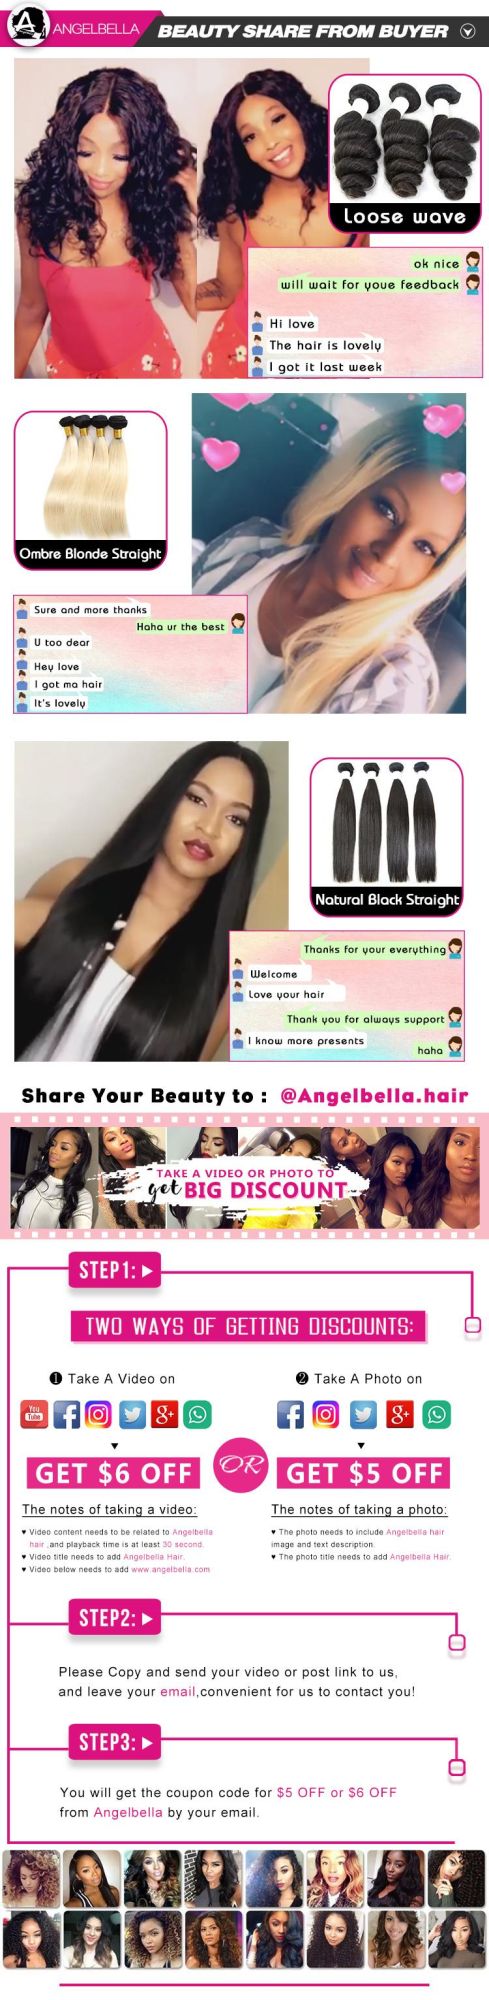 Angelbella Peruvian Hair Bundles Body Wave Natural Ombre Color Virgin Human Hair Weaving